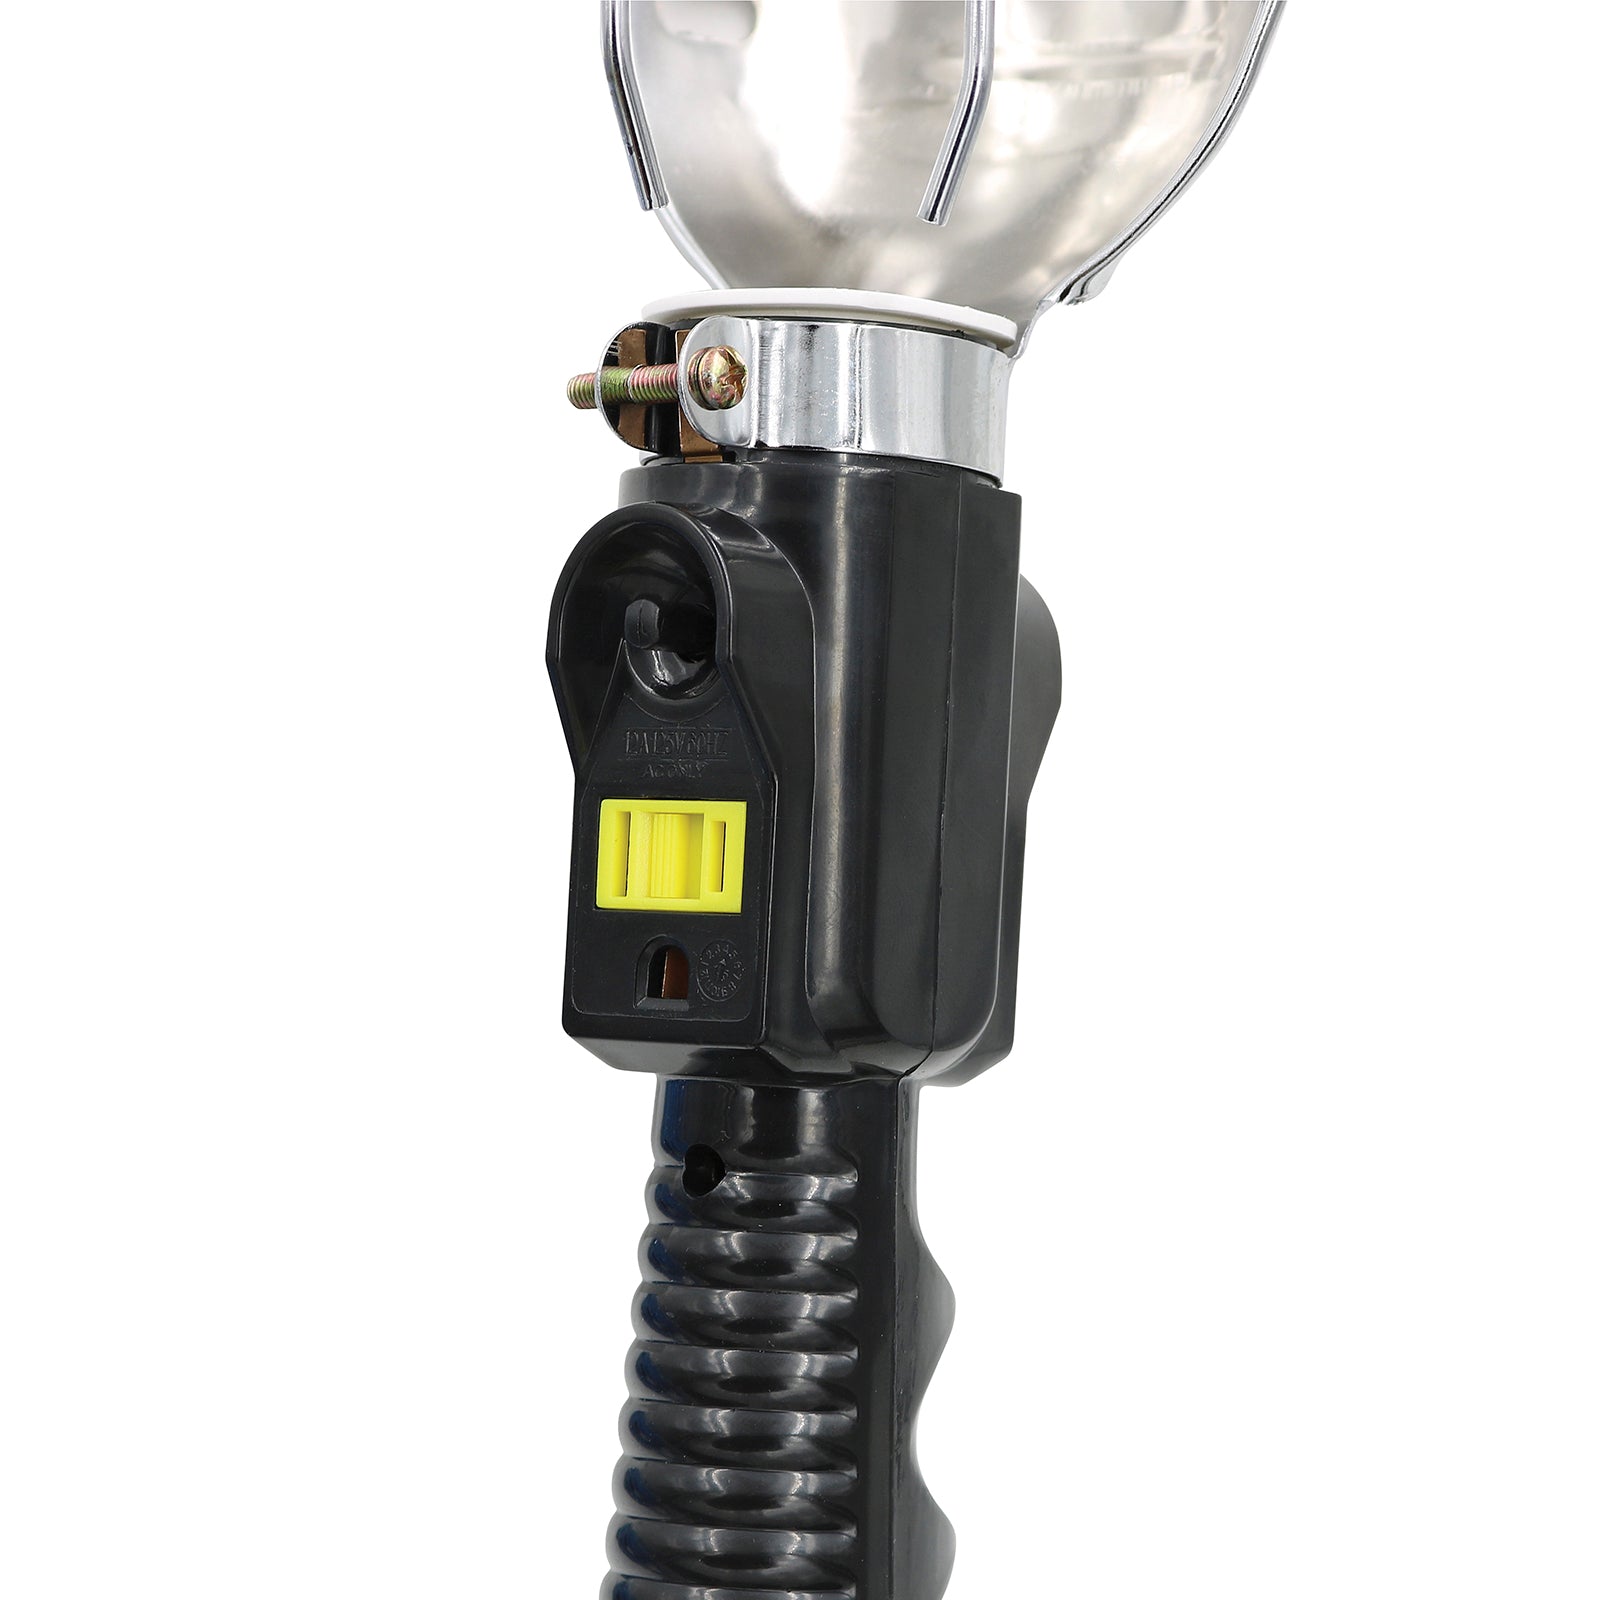 Prime 75 Watt Metal Guard Work Light with TPE-Rubber Cord